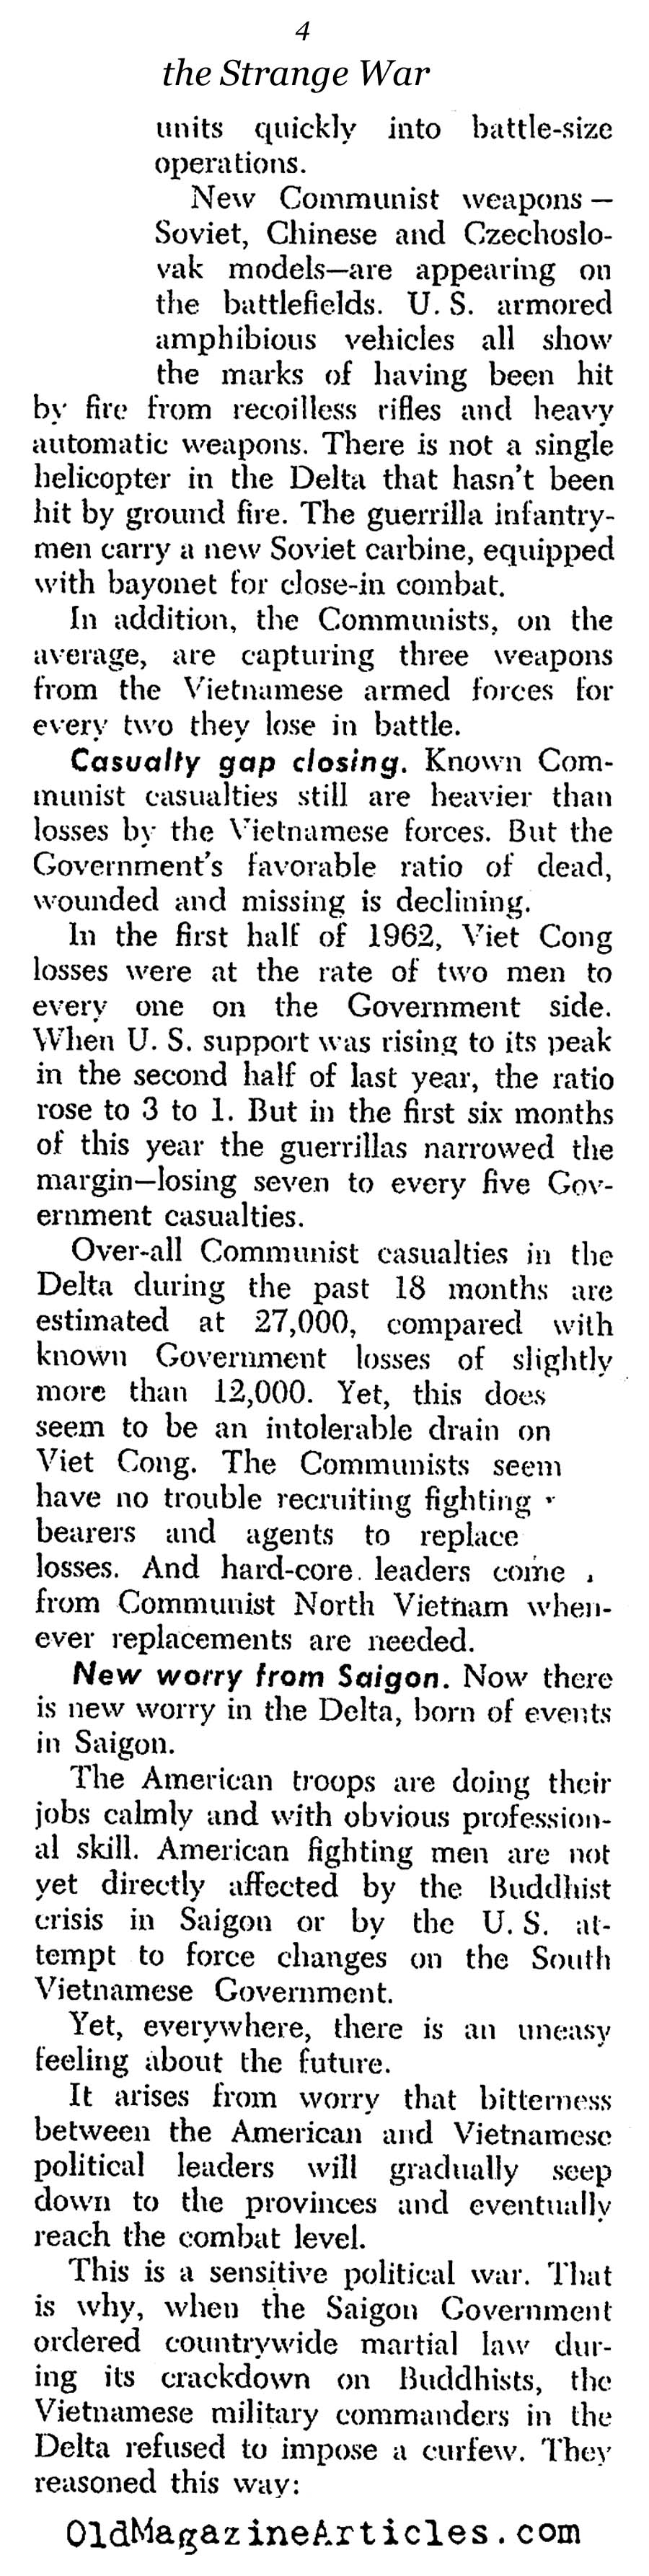 ''The Strange War the U.S. Is Not Winning'' (United States News, 1963)